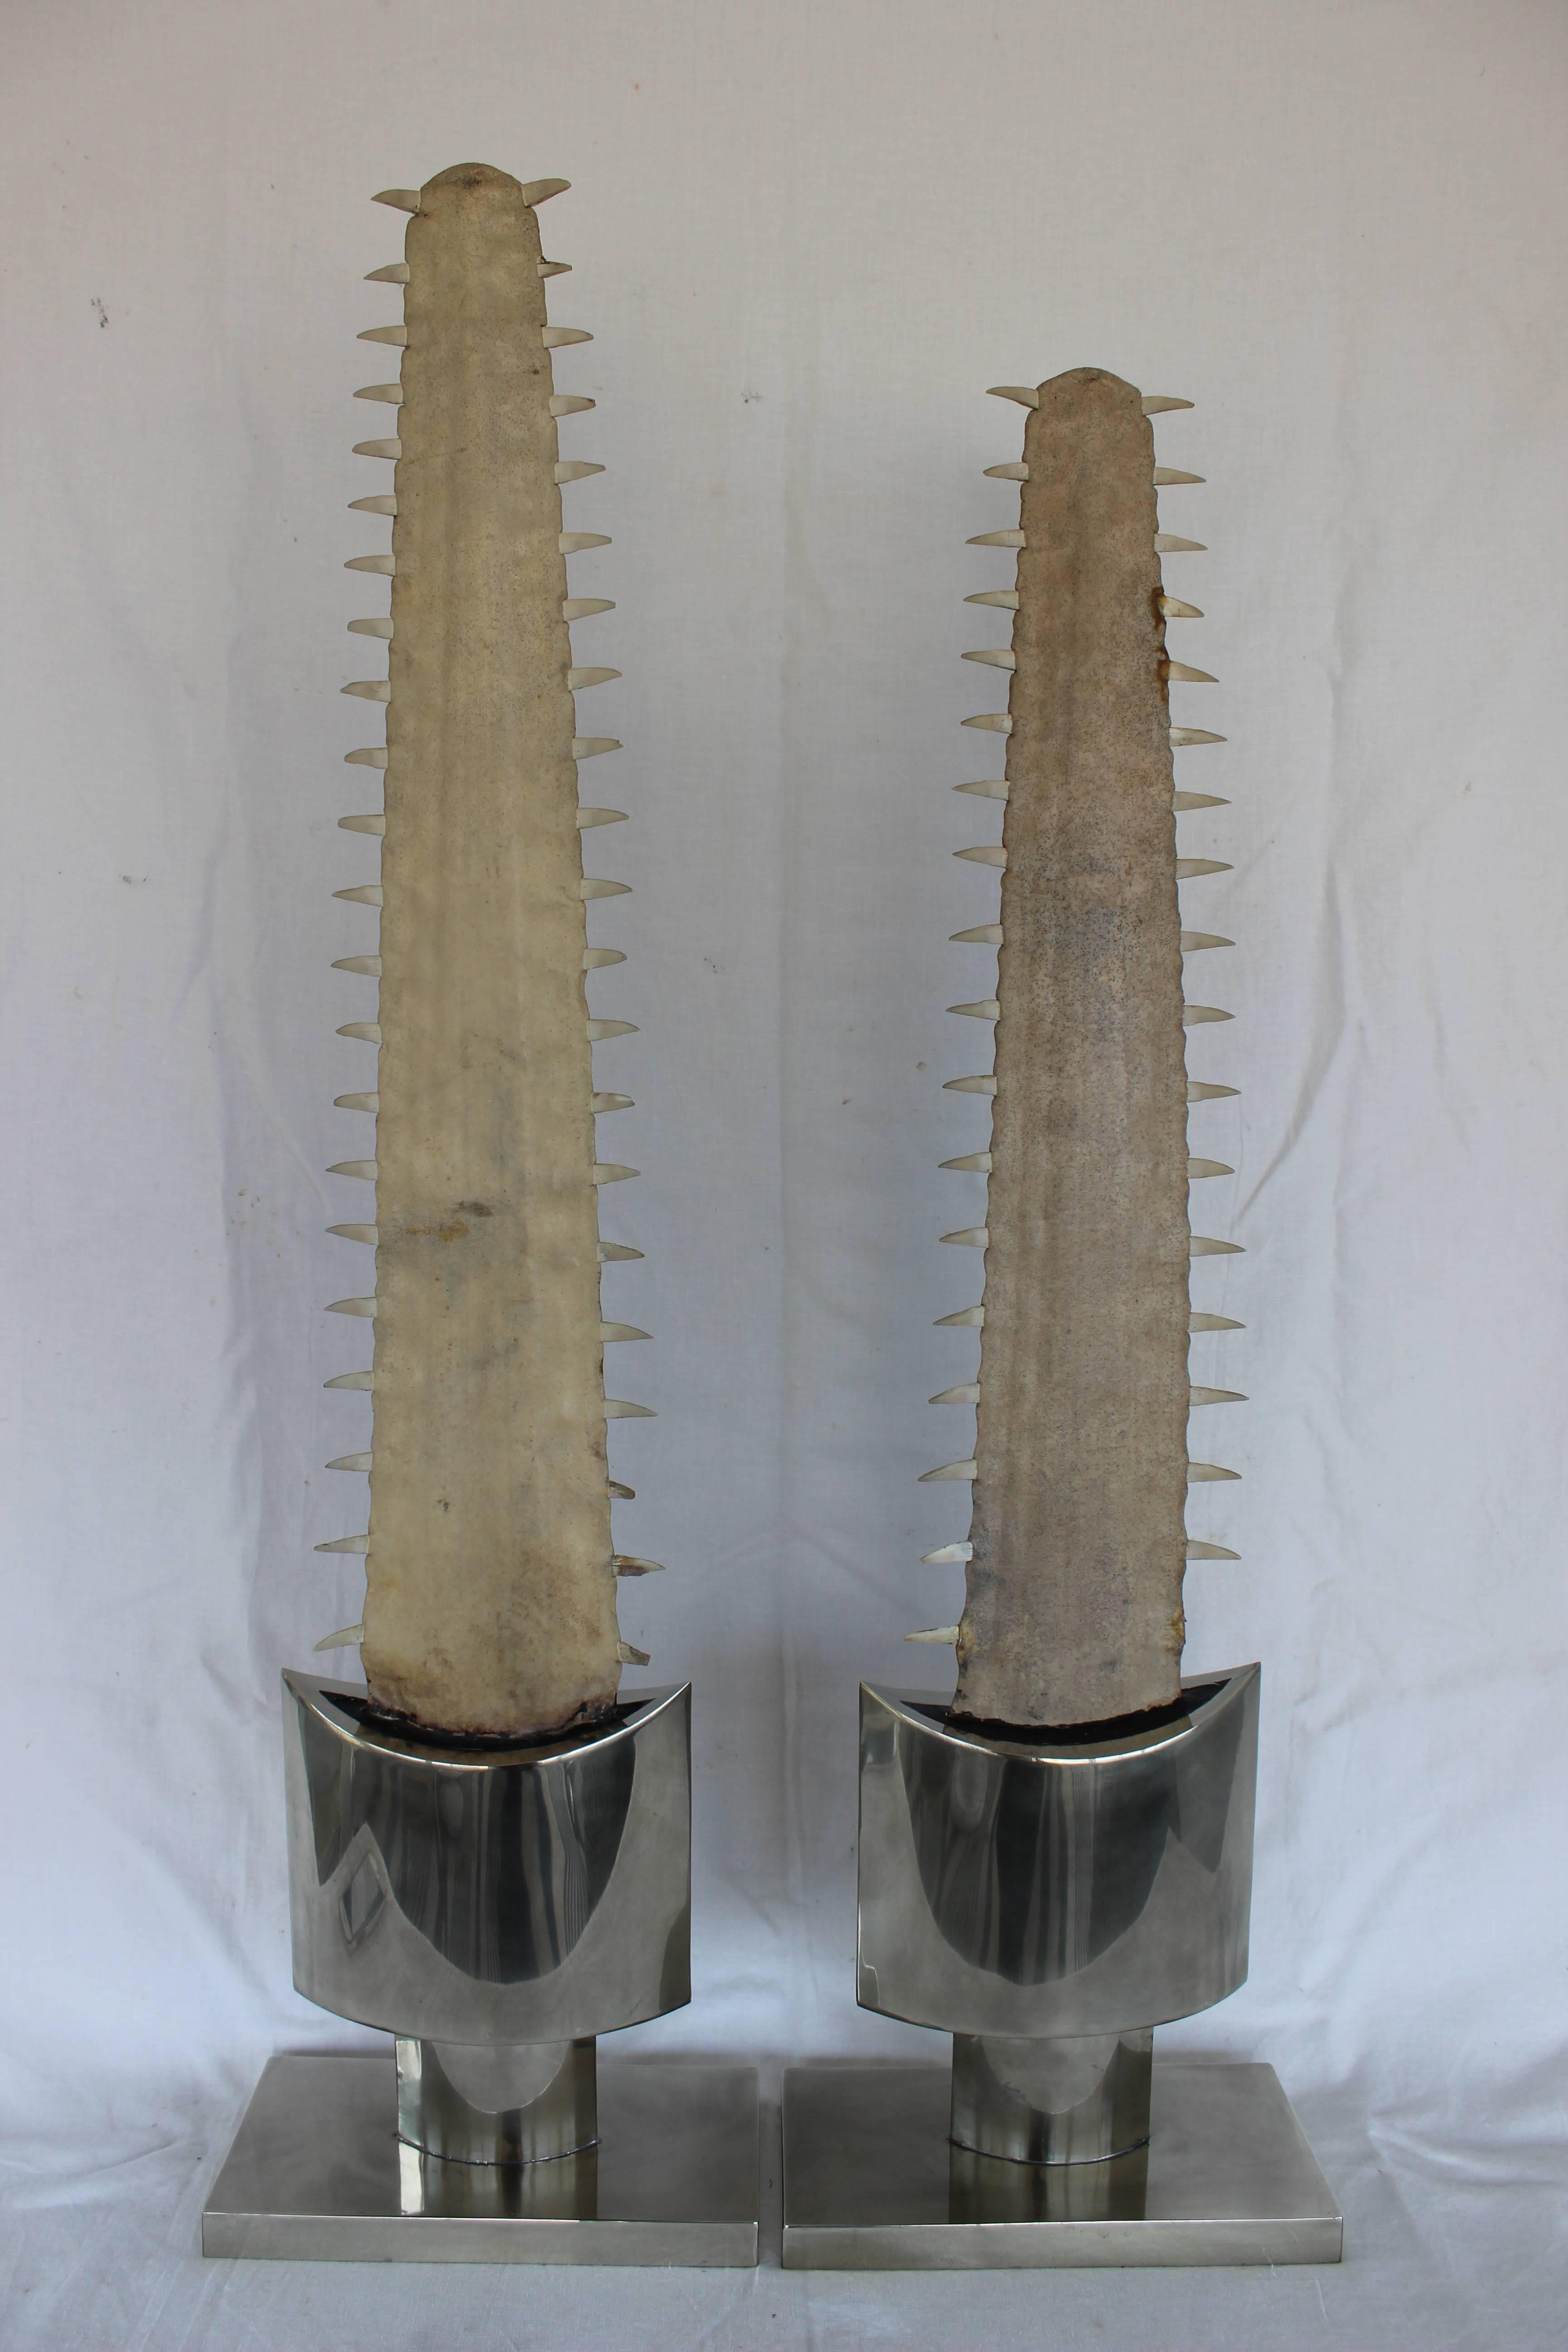 Pair of sawfish bills mounted on steel bases in the style Karl Springer.

Measures: 39 5/8